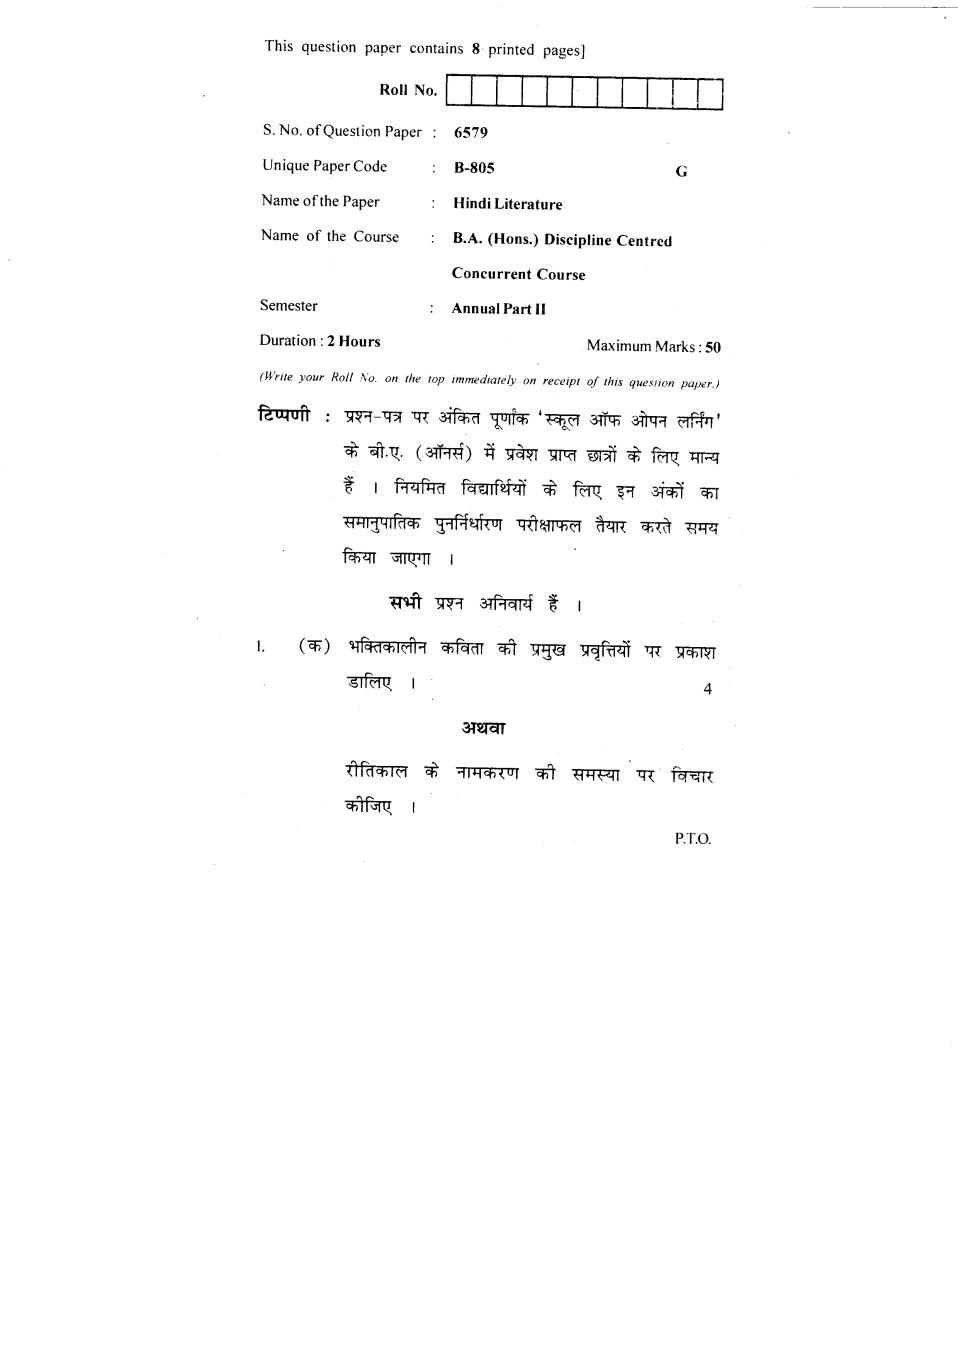 DU SOL Question Paper 2018 BA (Hons.) Hindi Literature - Page 1